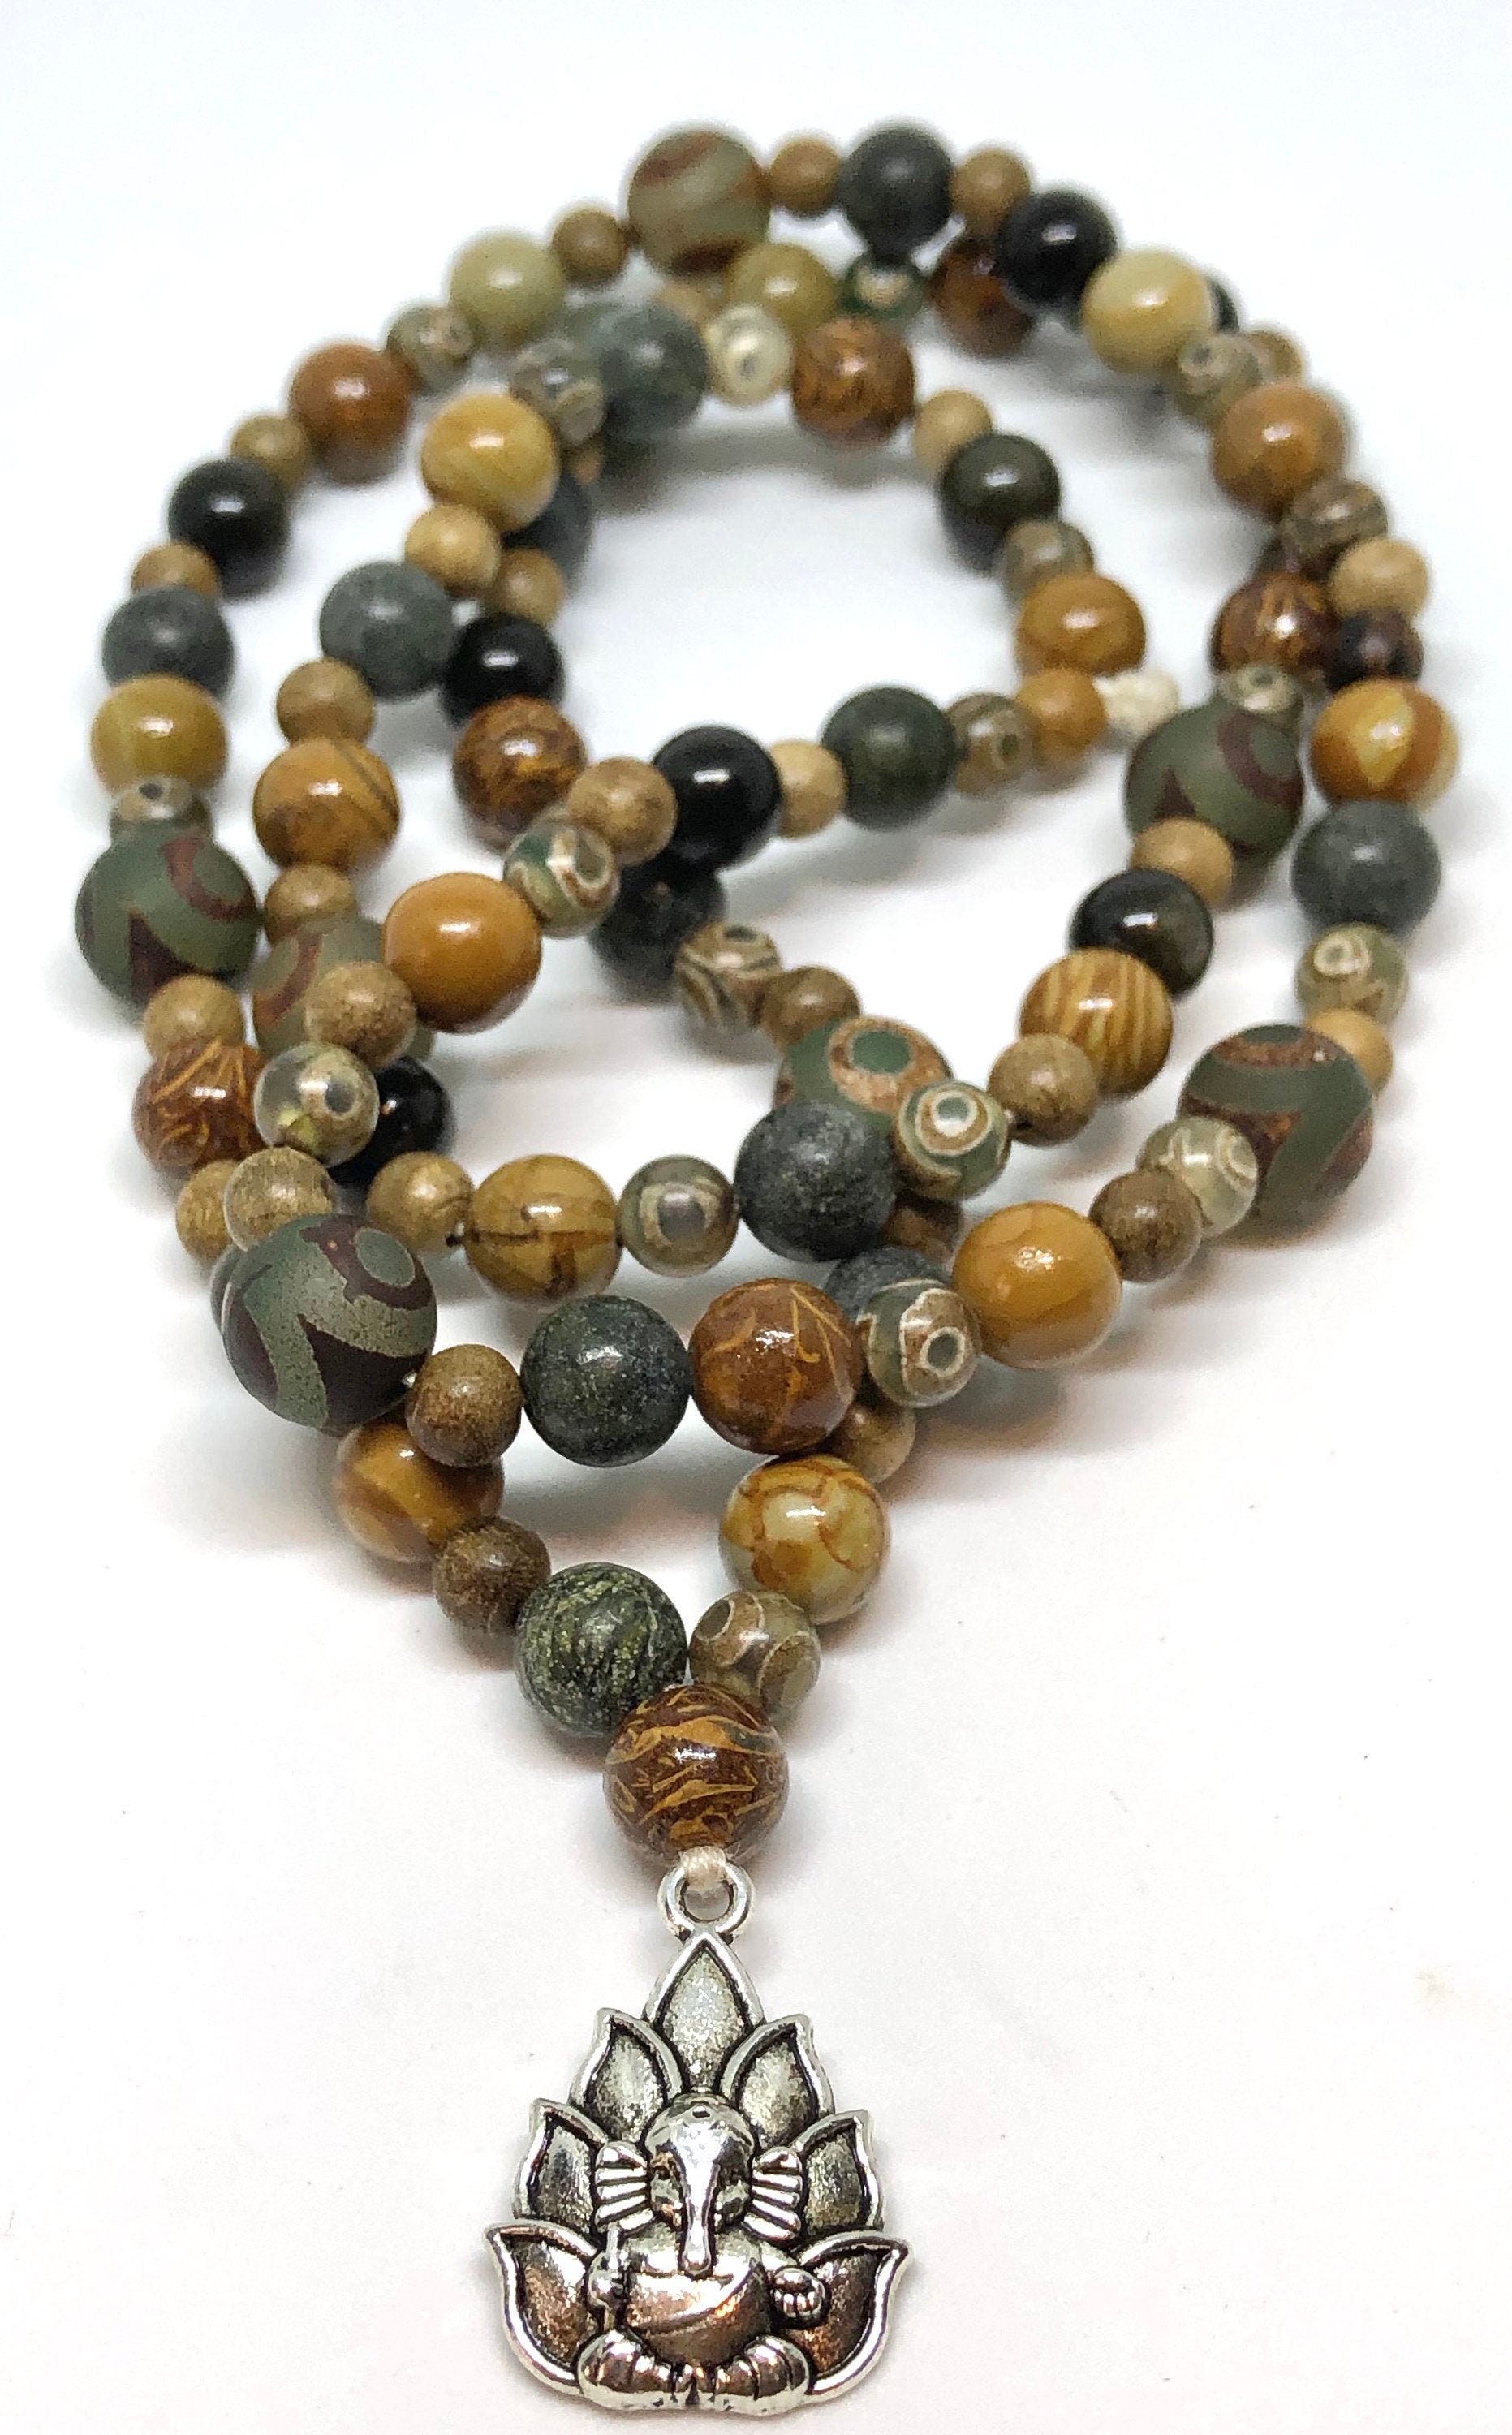 Mala 108 Bead Necklace with Ganesh Pendant